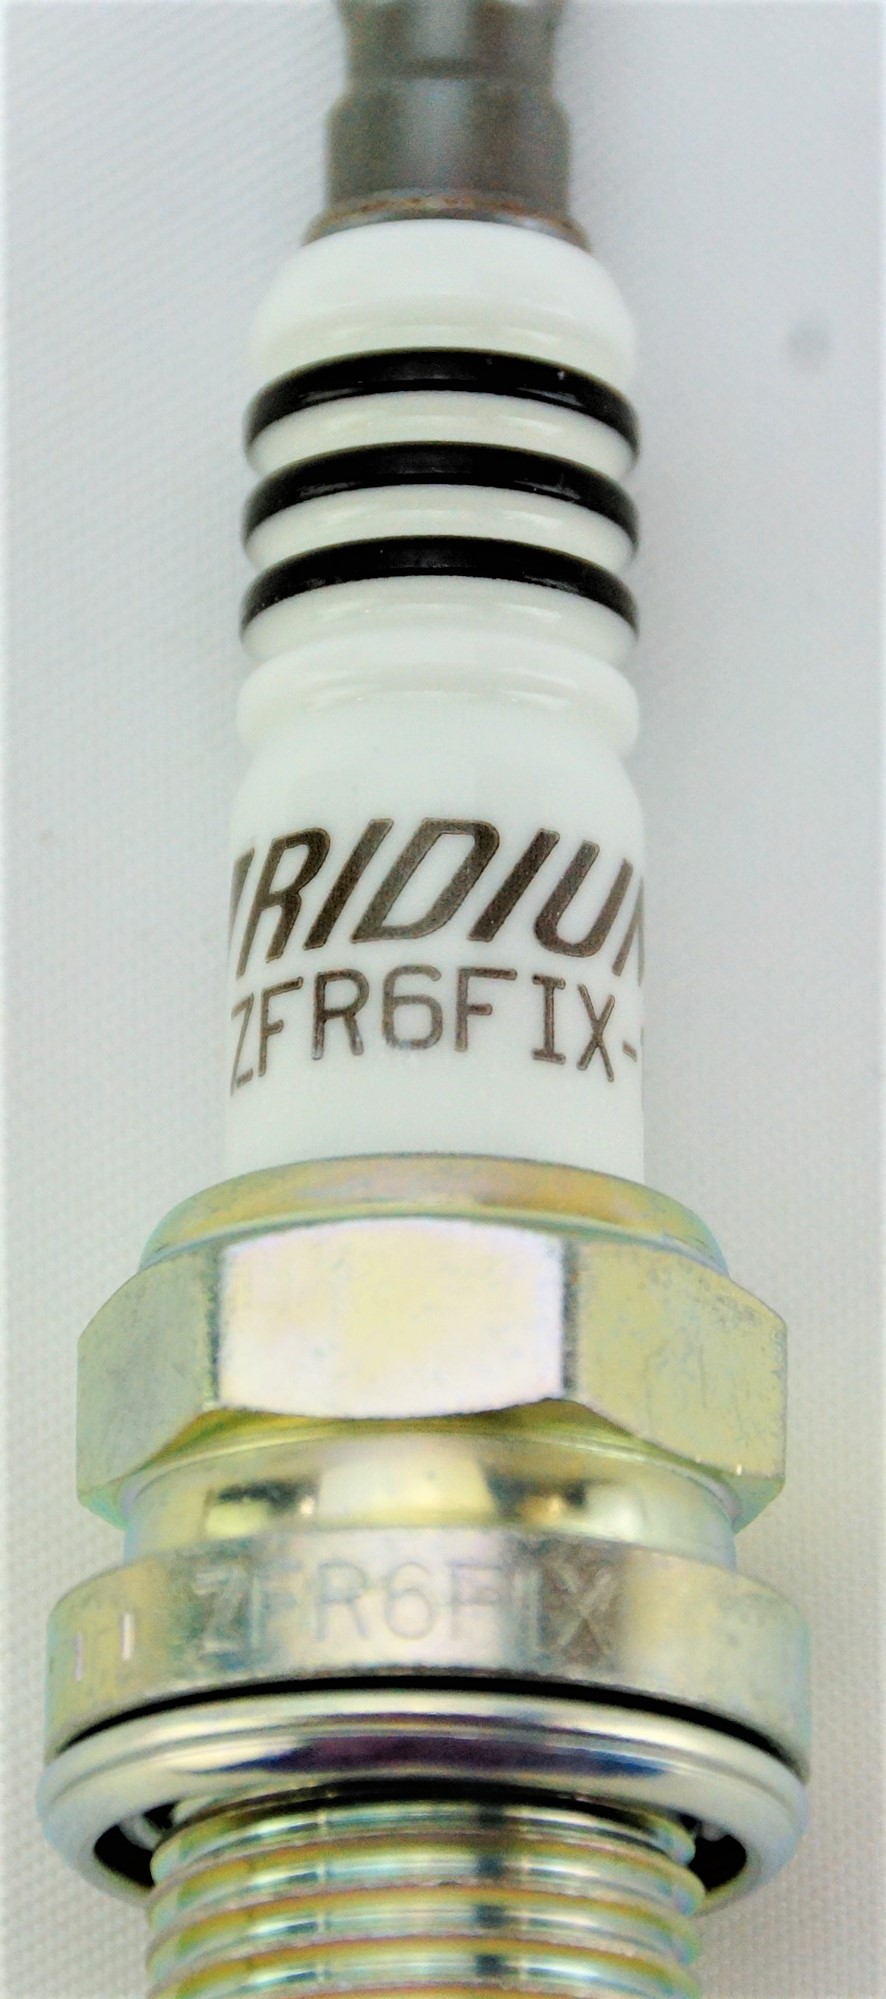 Set of 8 Genuine NGK 6441 Iridium IX Spark Plugs ZFR6FIX11 - image 8